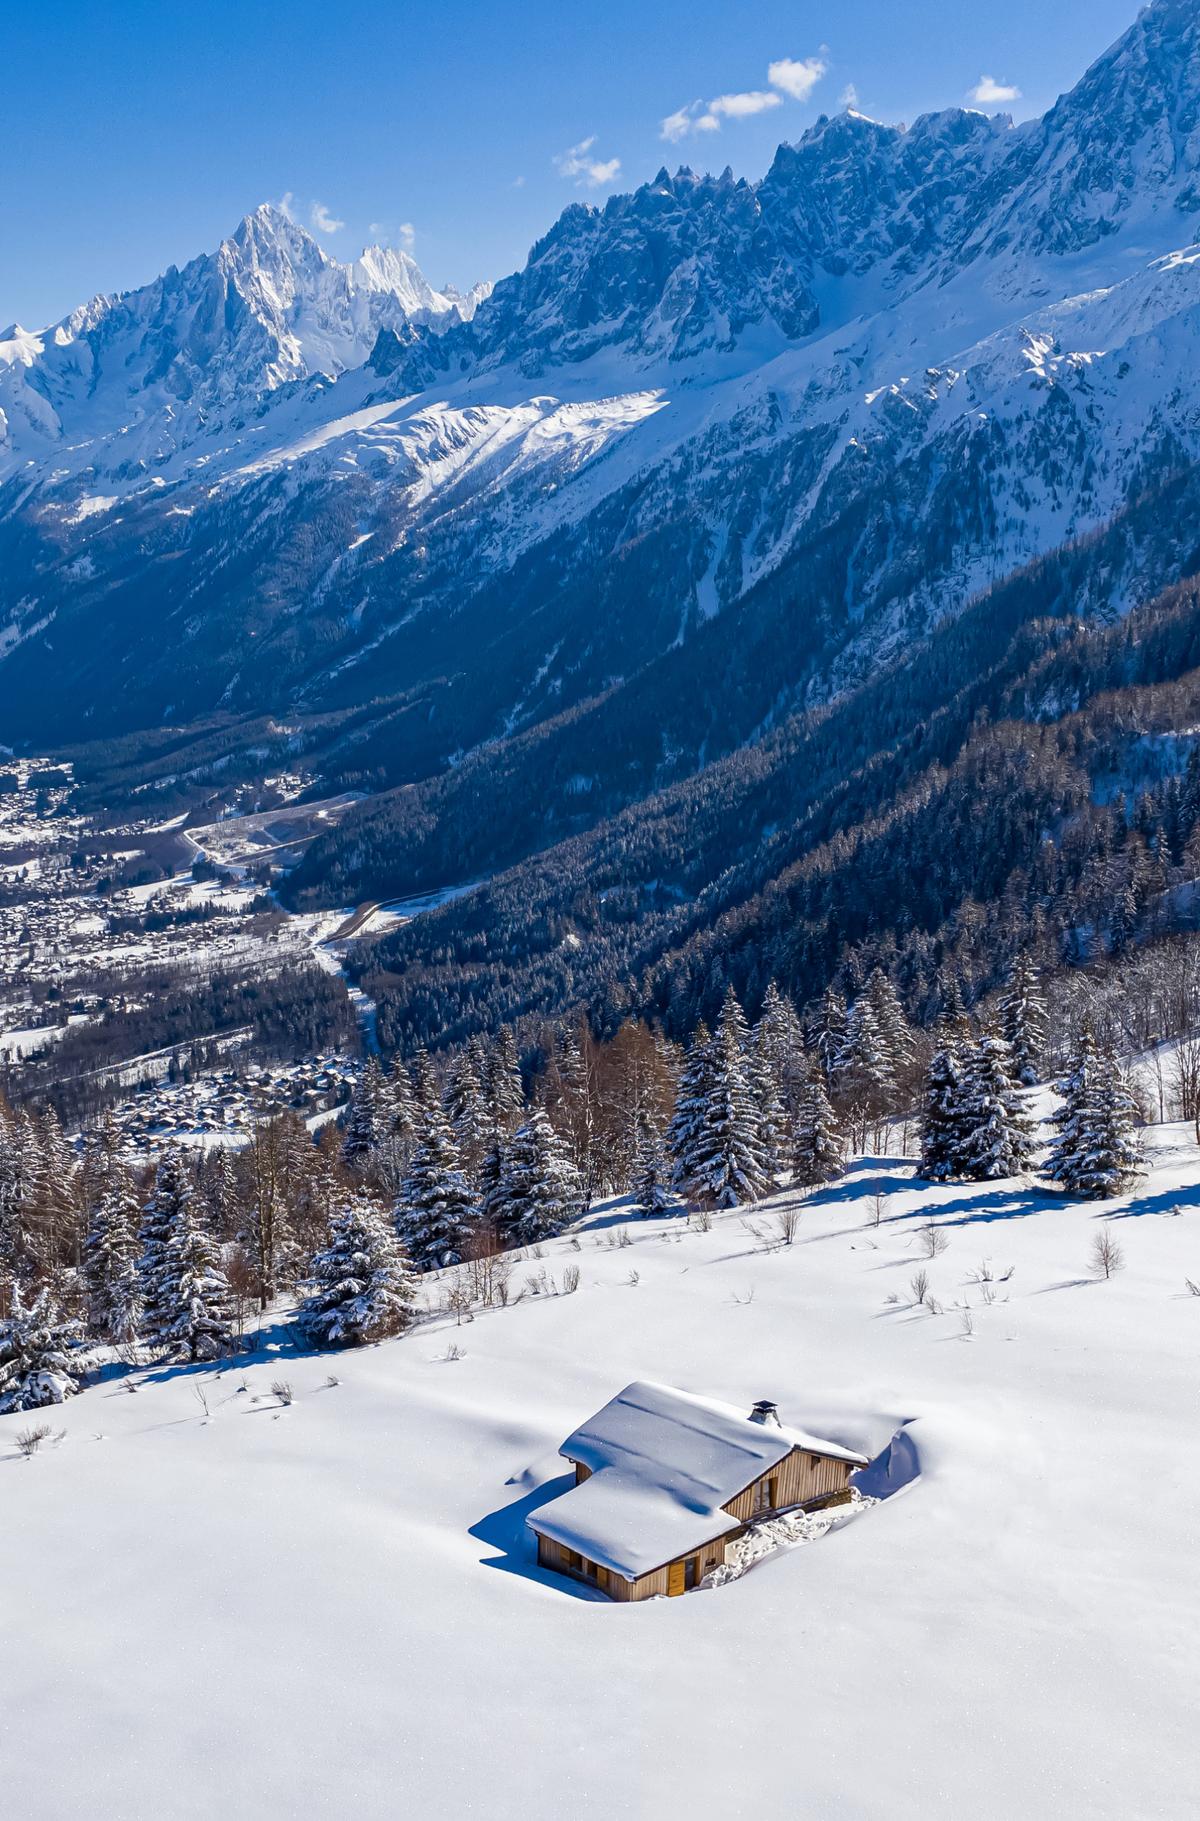 Chamonix valley in winter